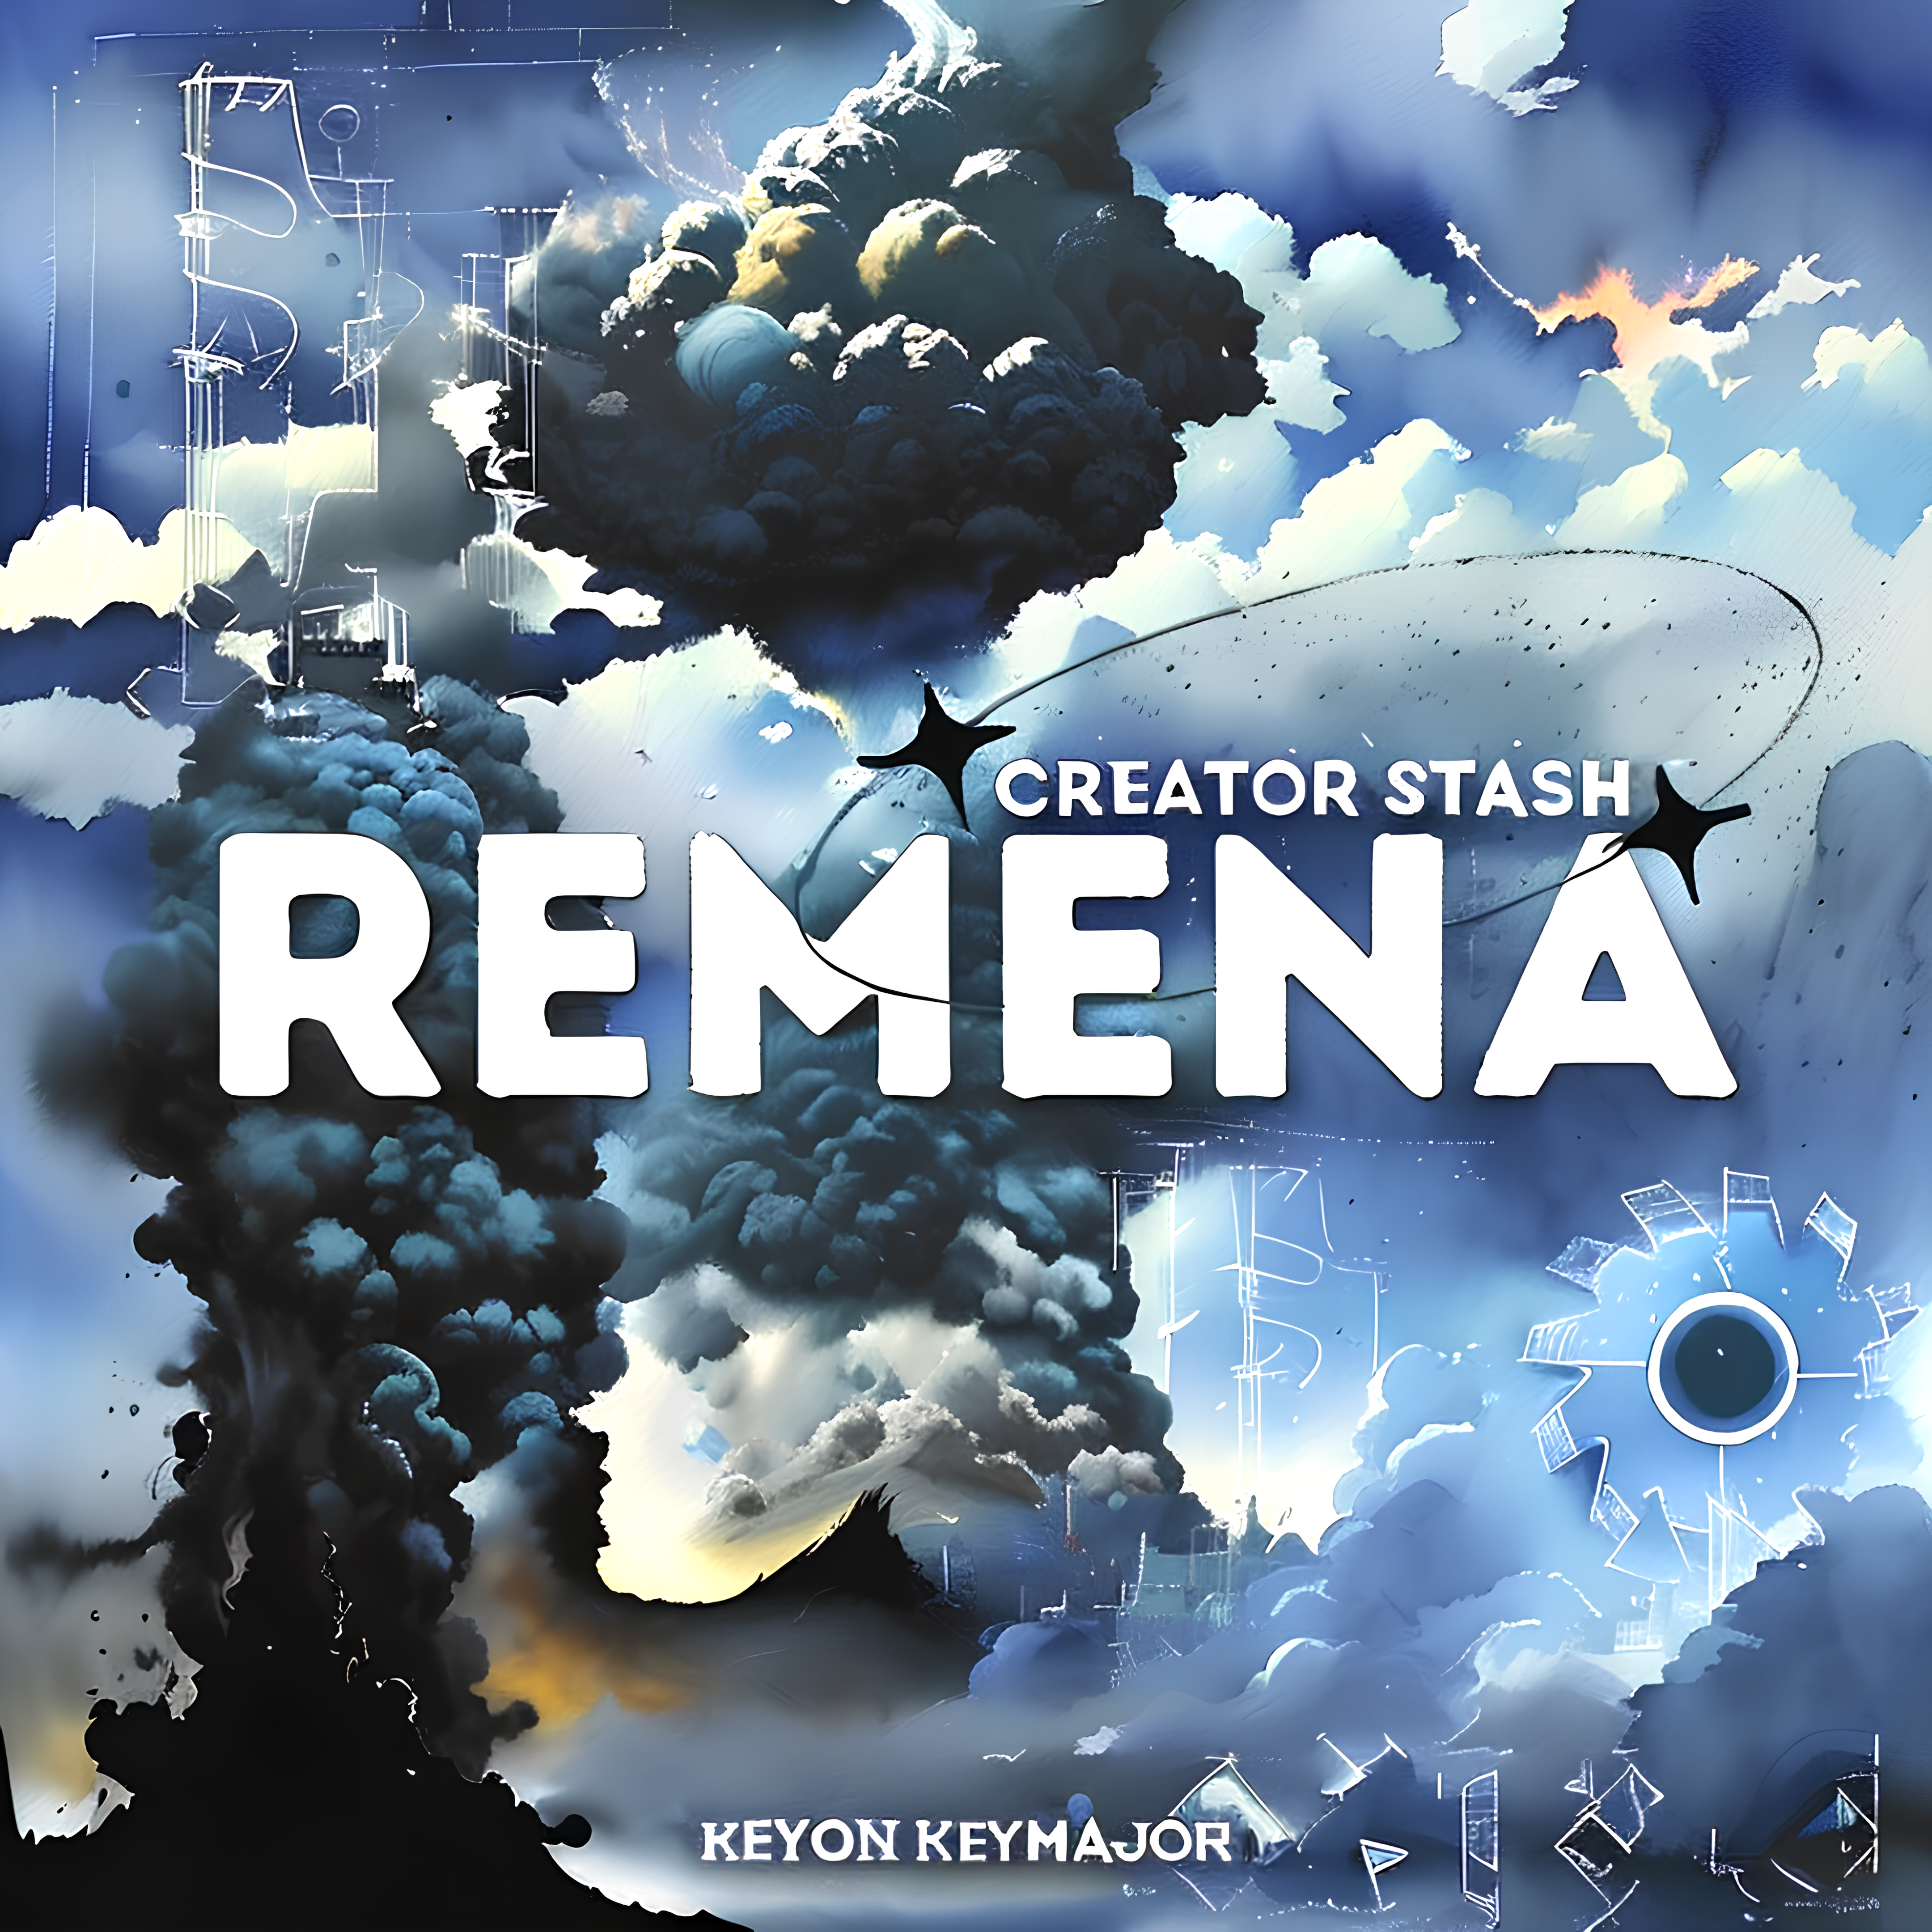 Remena Creator Series I (Regular Edition)